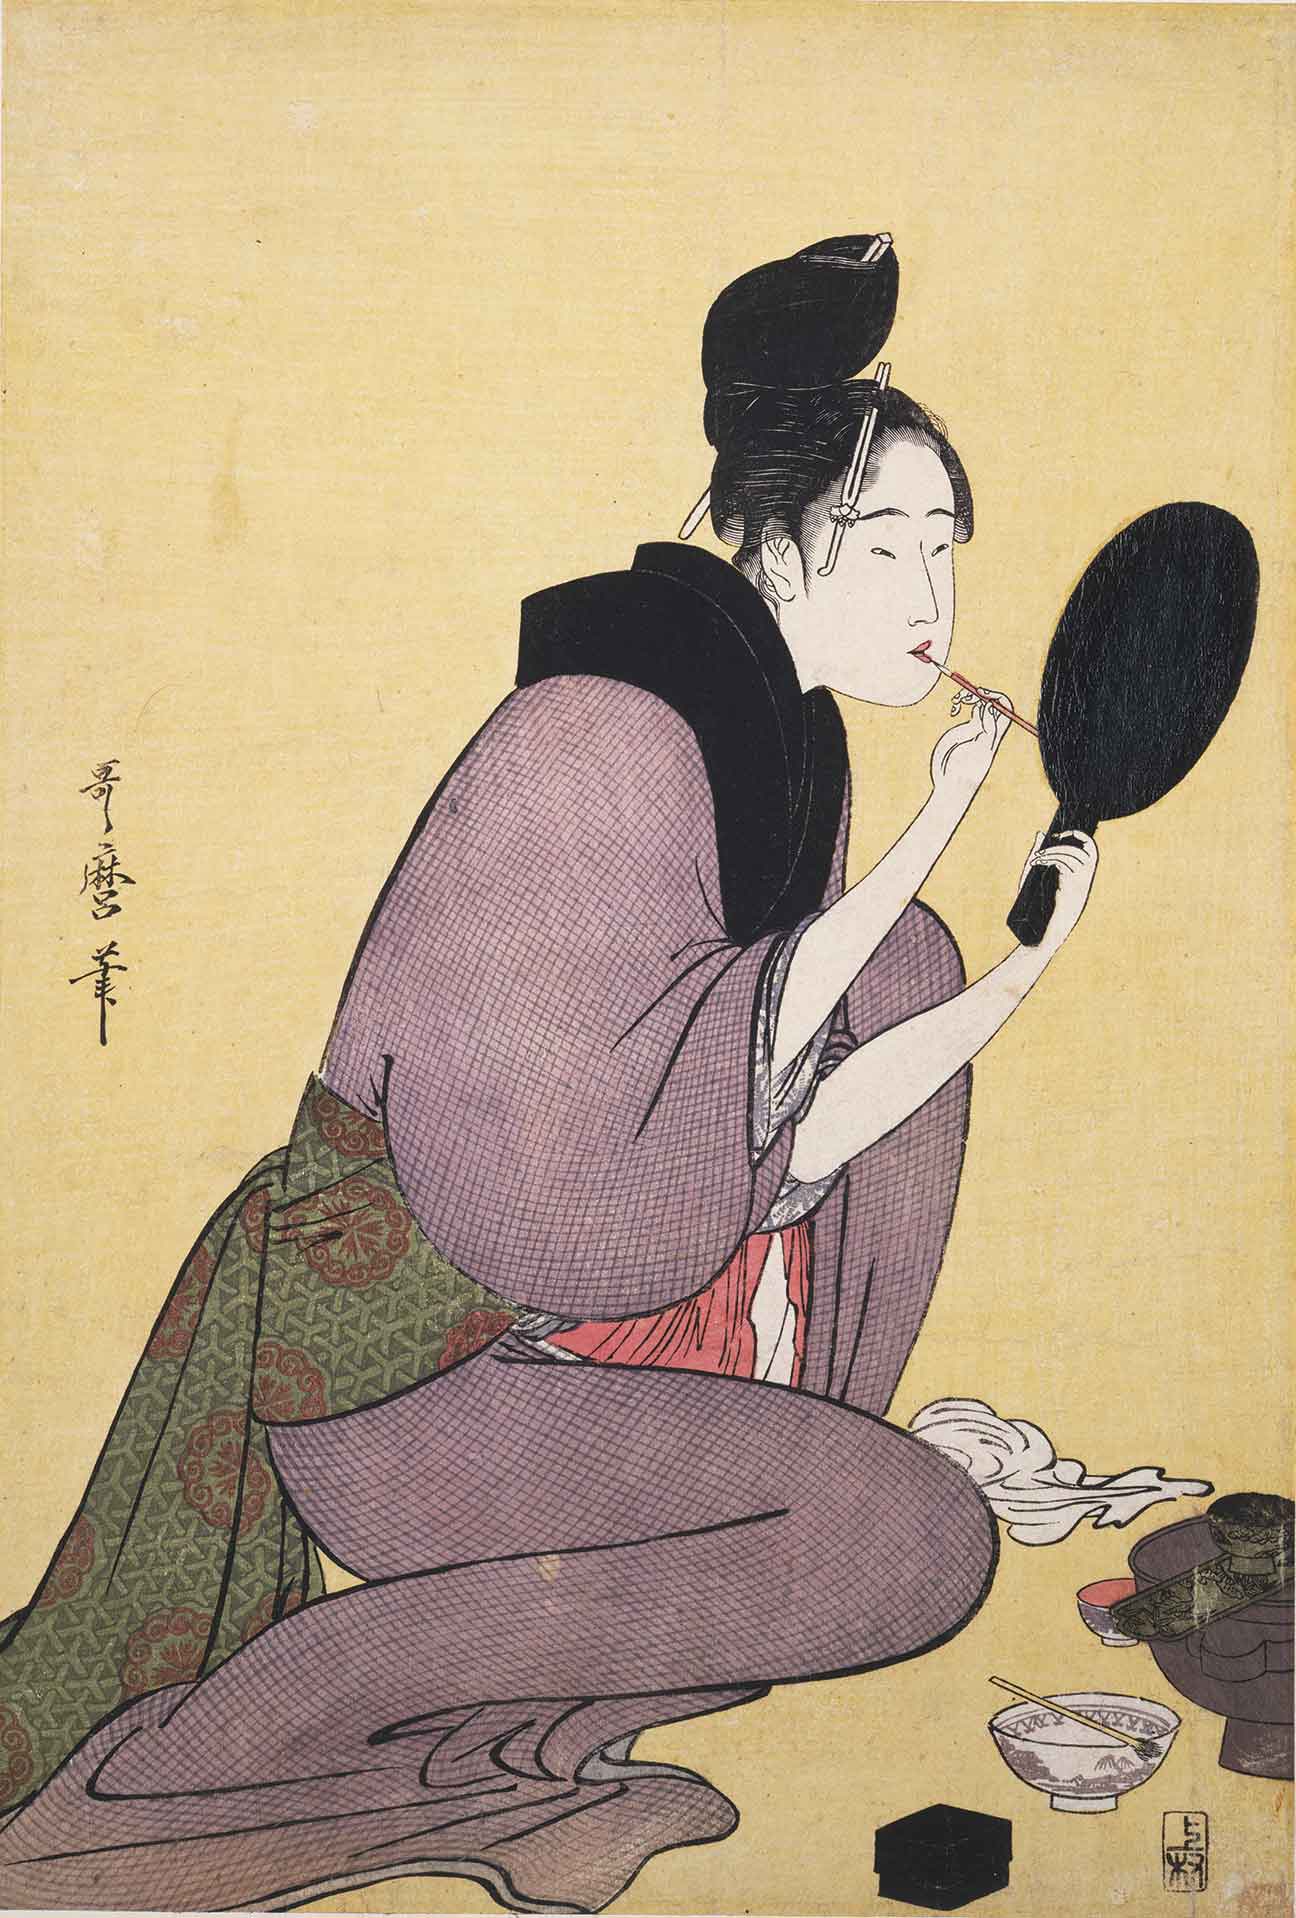 Kuchi-beni, Painting the Lips by Utamaro, Kitagawa (1753-1806), woodblock print, ukiyo-e, 36.3 x 24.8 cm, New York Public Library